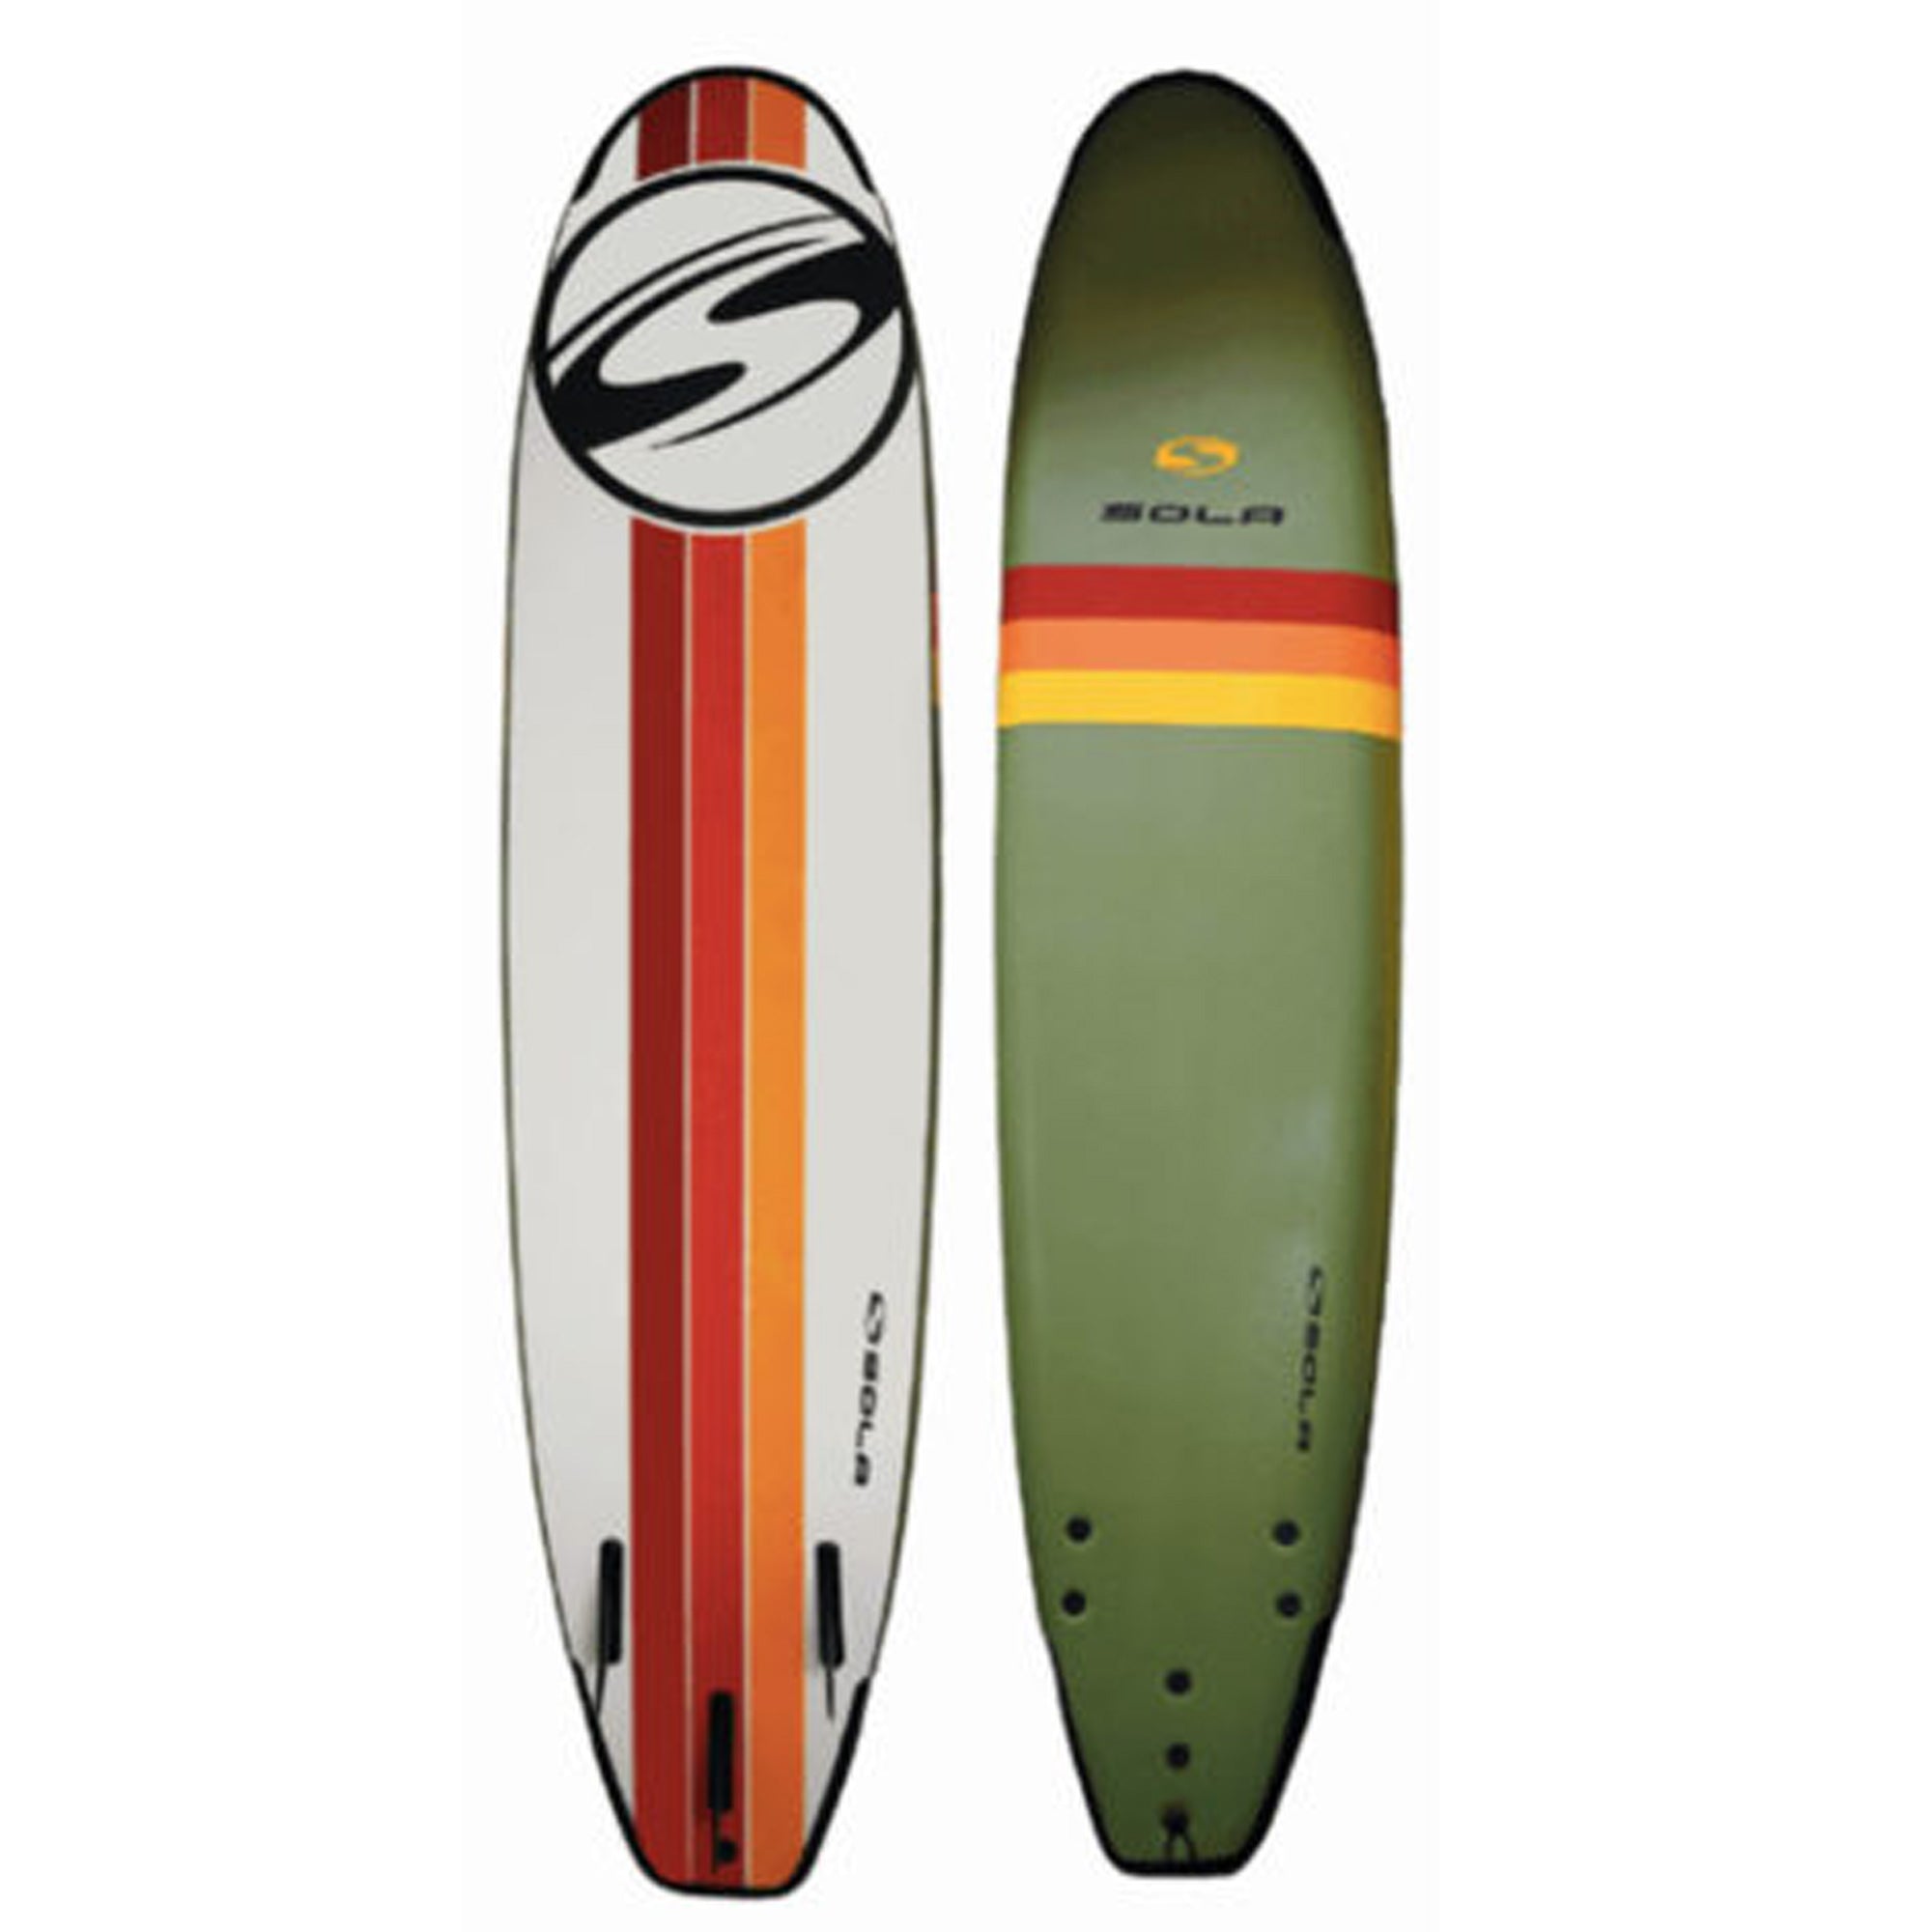 Sola Soft Surfboard - Khaki/Orange